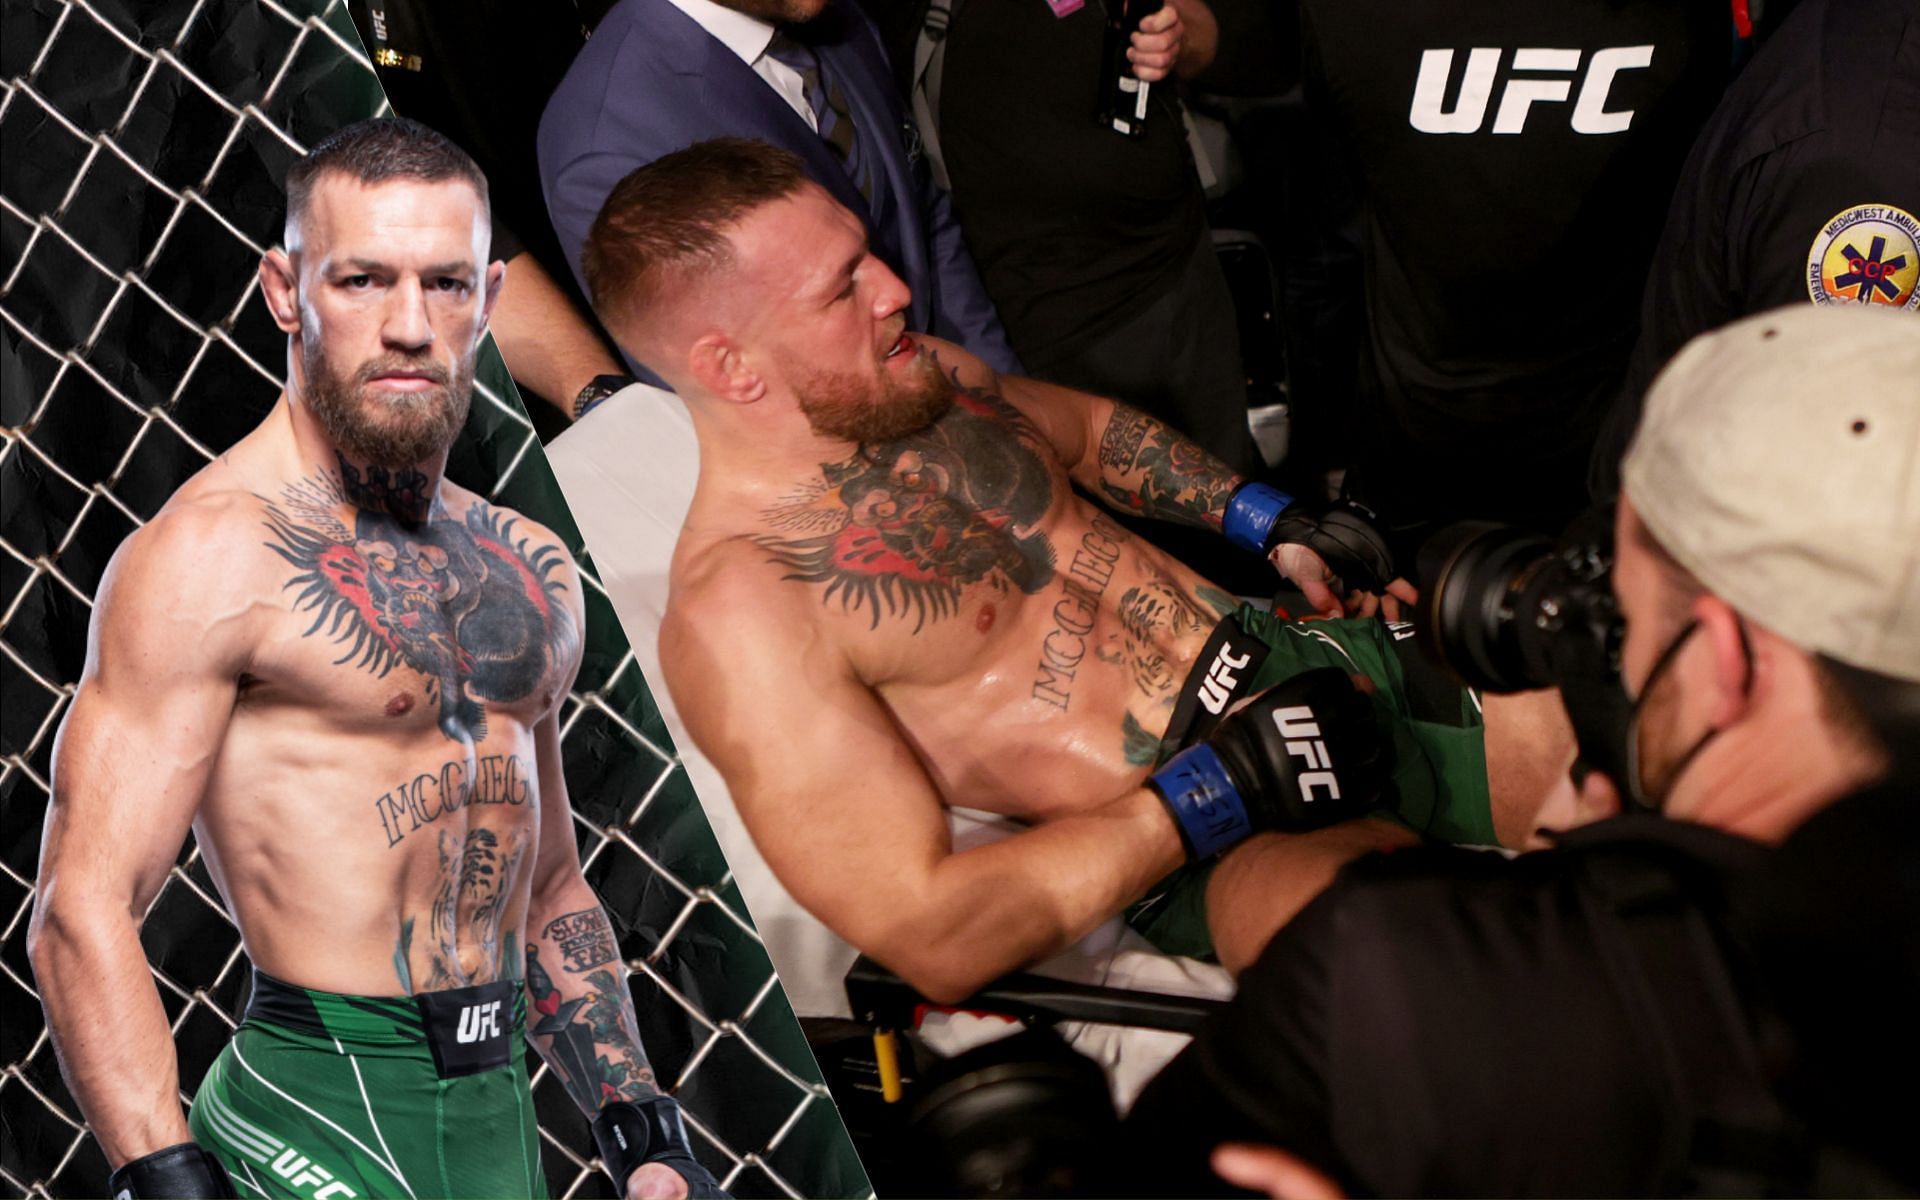 Image Credits: Conor McGregor (Left), UFC.com/ Conor McGregor (Right), Getty Images